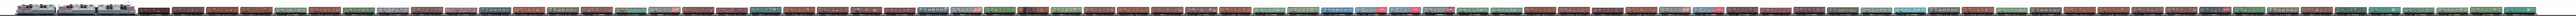 Panorama freight train (3 locomotives and 71 wagon)